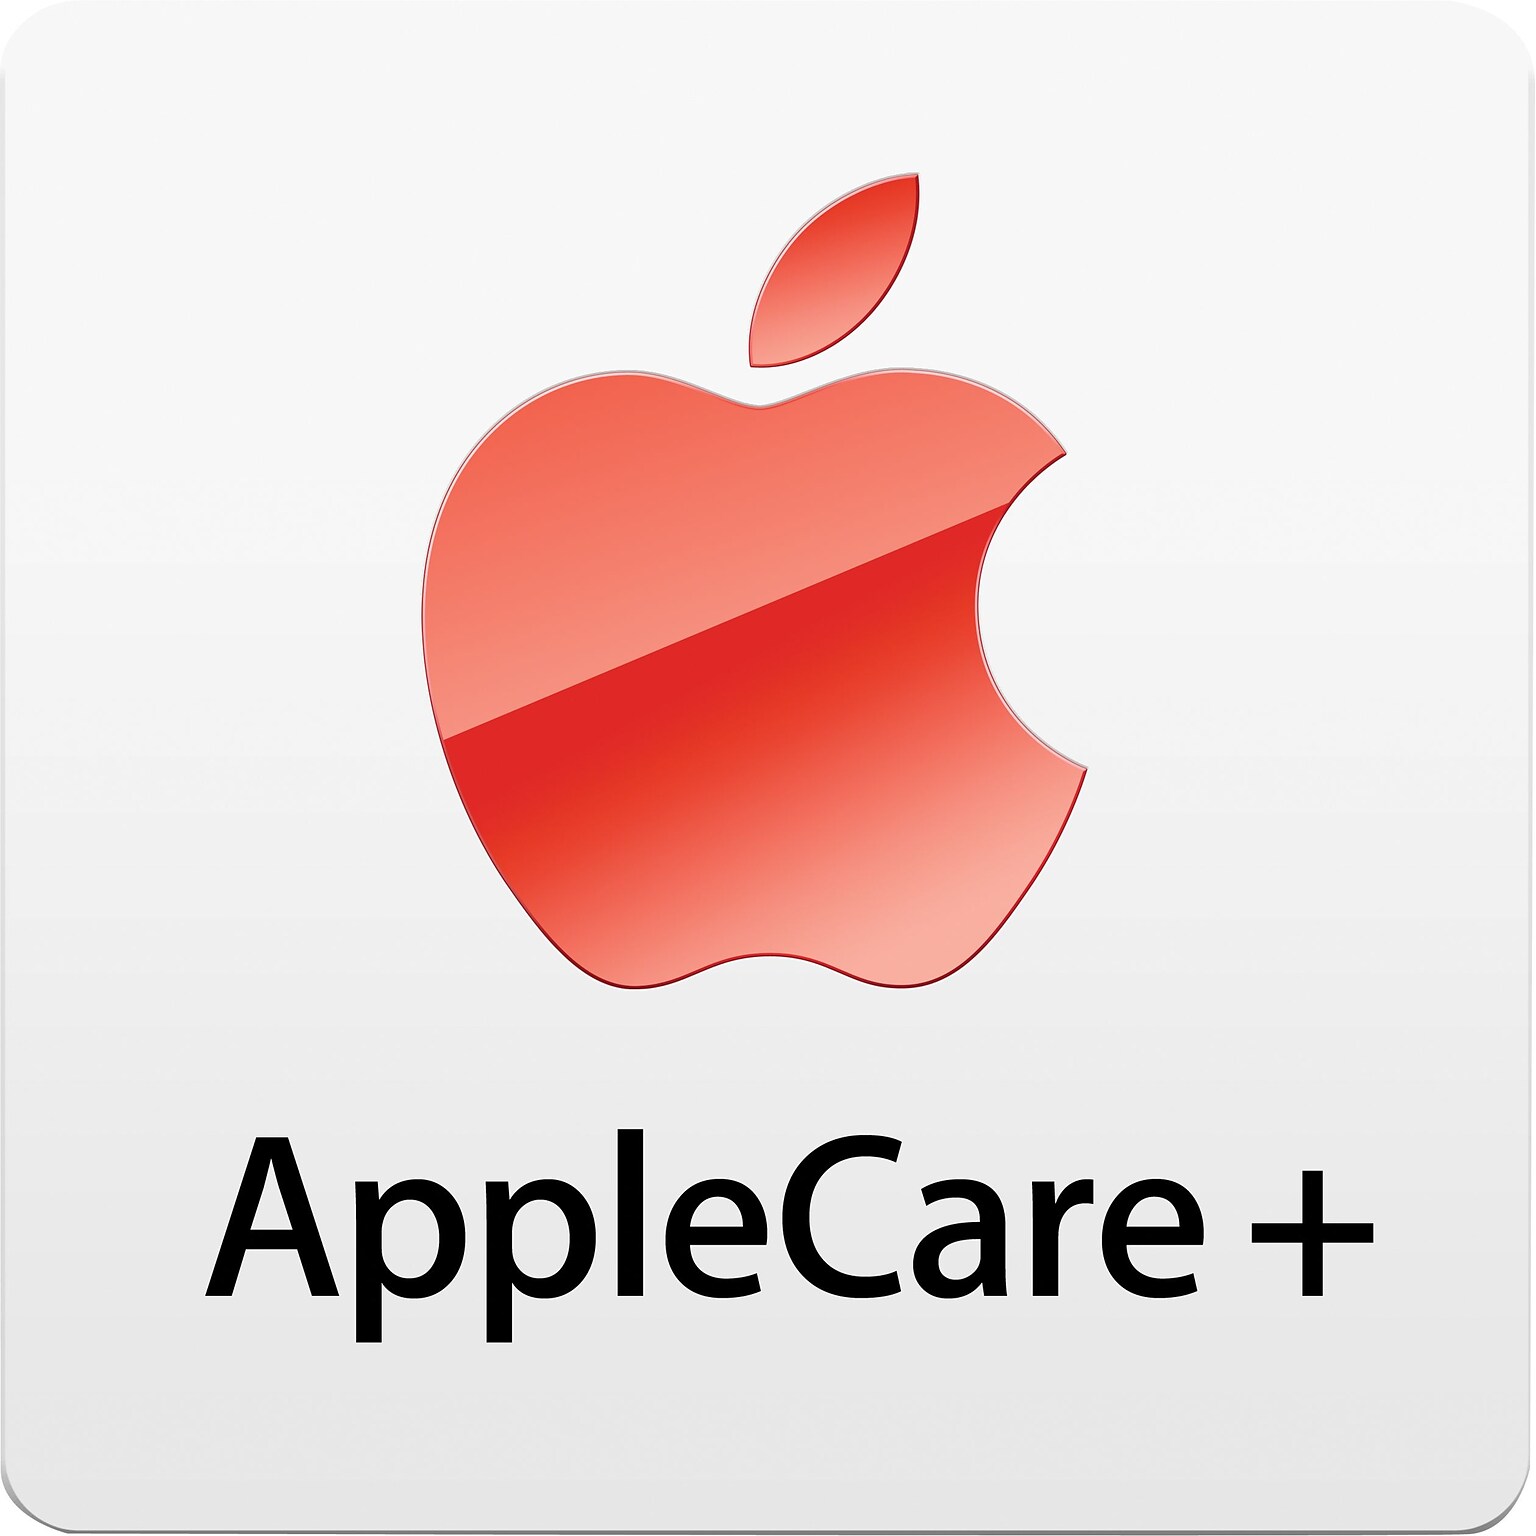 AppleCare+ 2-year Protection Plan for iPad mini with Retina Display, Wi-Fi + Cellular (Verizon Wireless) 64B, Silver